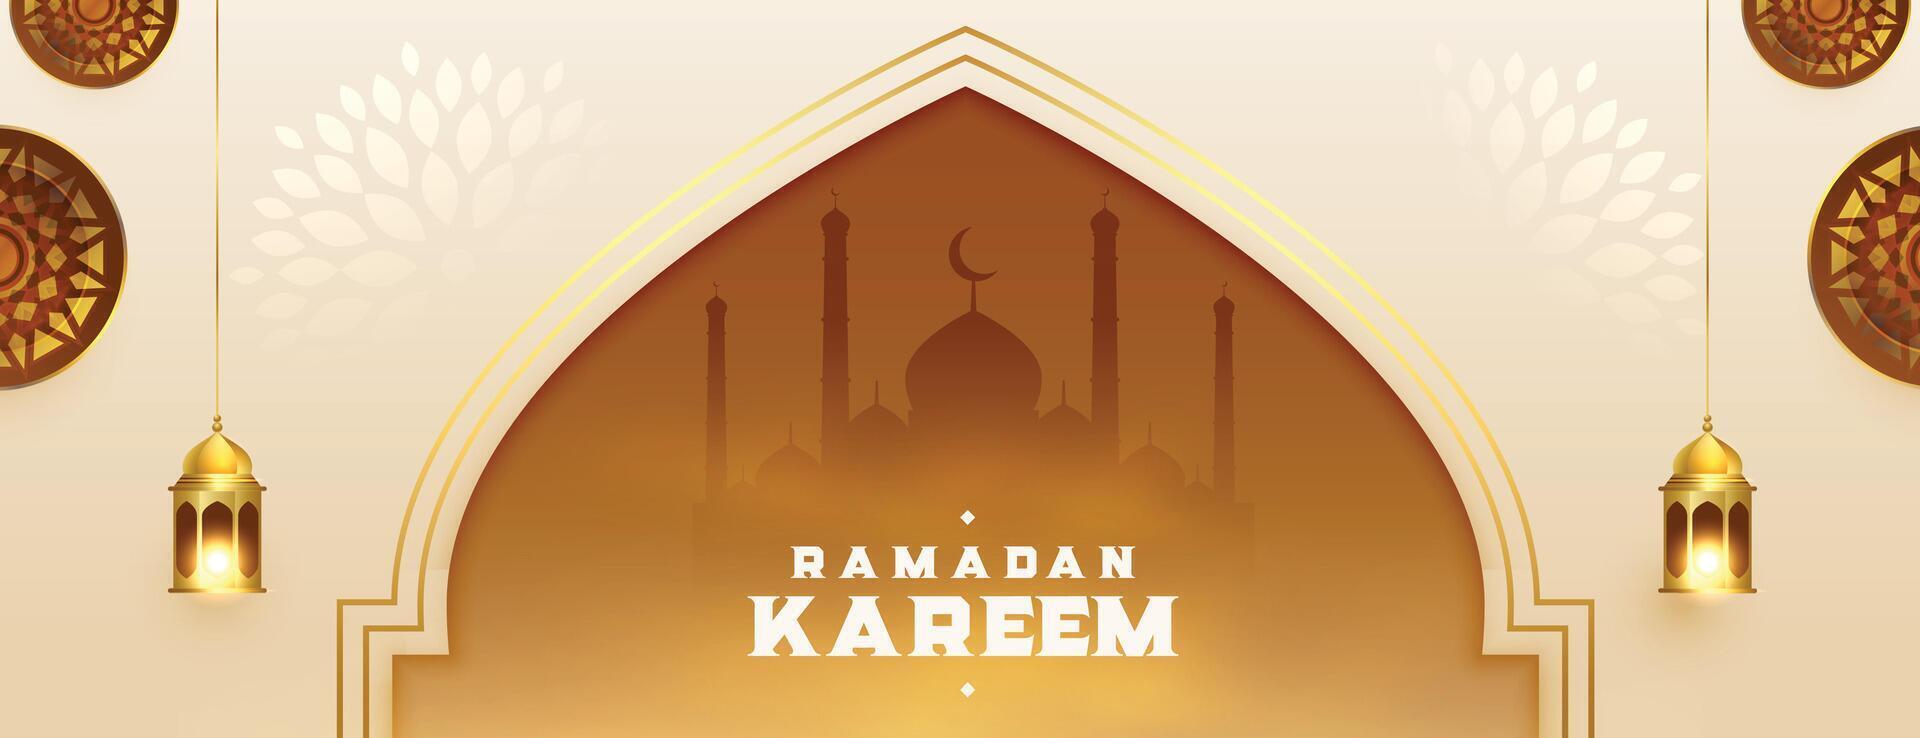 arabicum ramadan kareem muslim festival baner design vektor